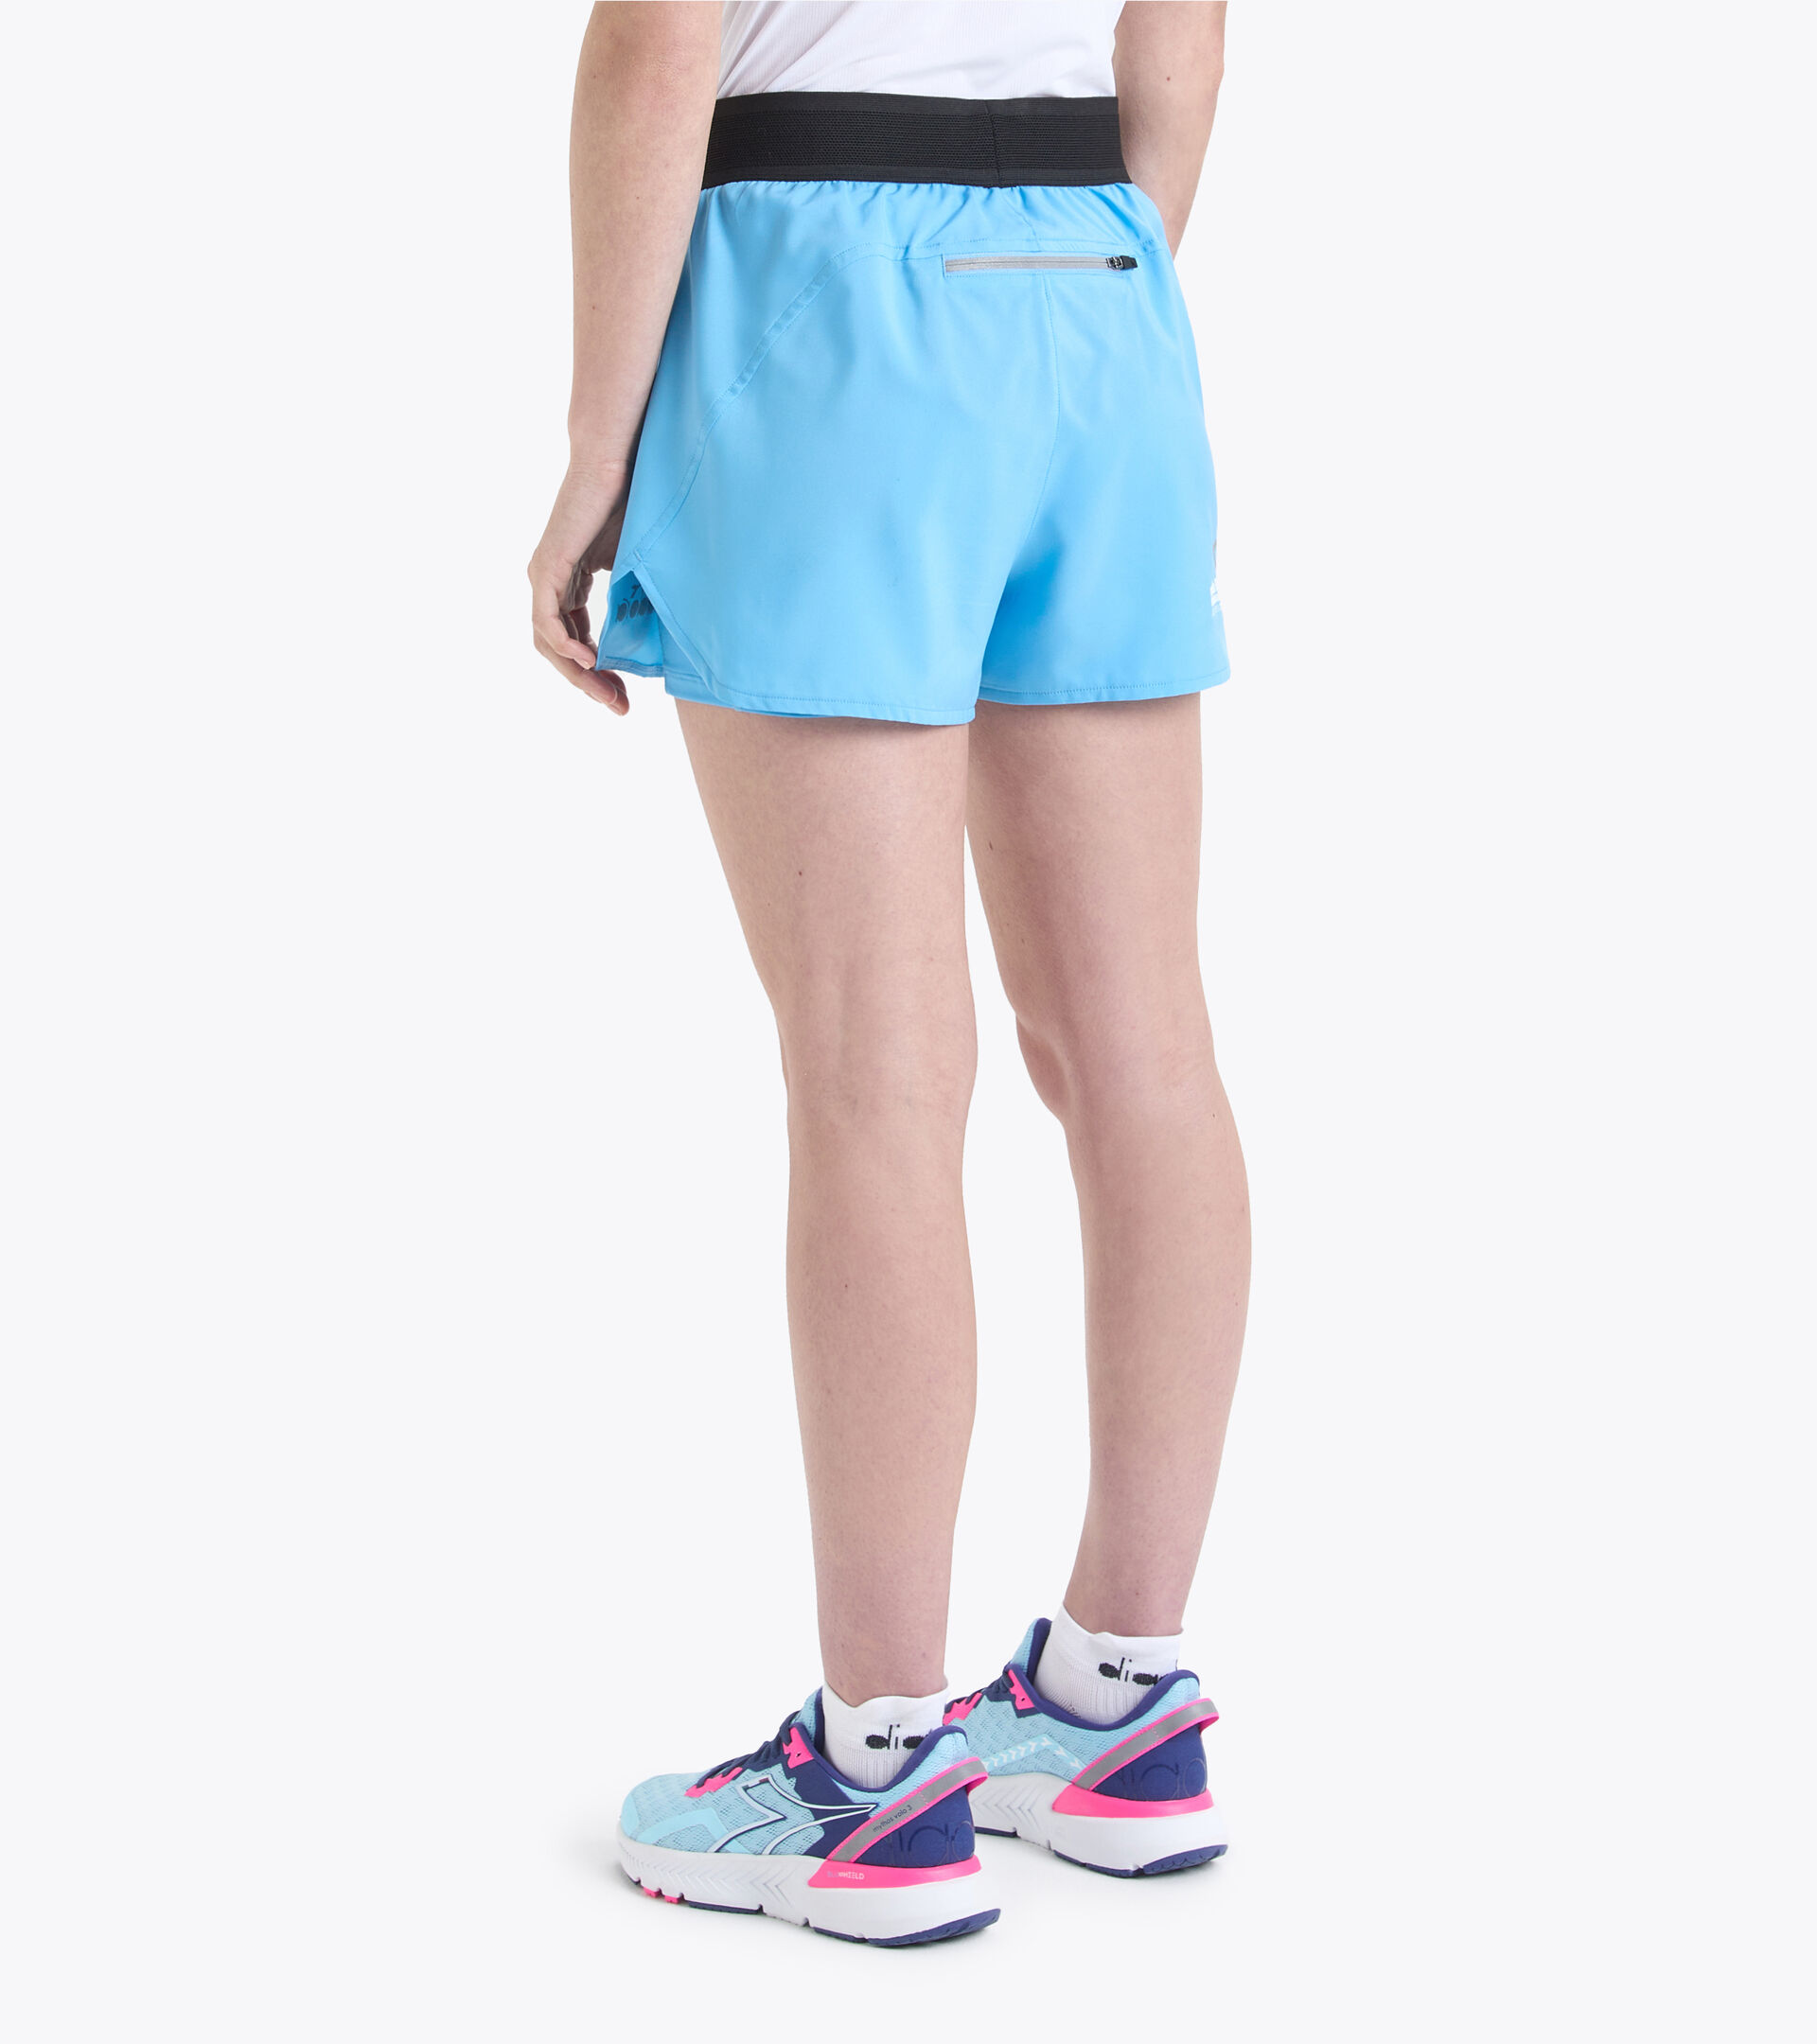 L. DOUBLE LAYER SHORTS BE ONE Running shorts - Women - Diadora Online Store  FI